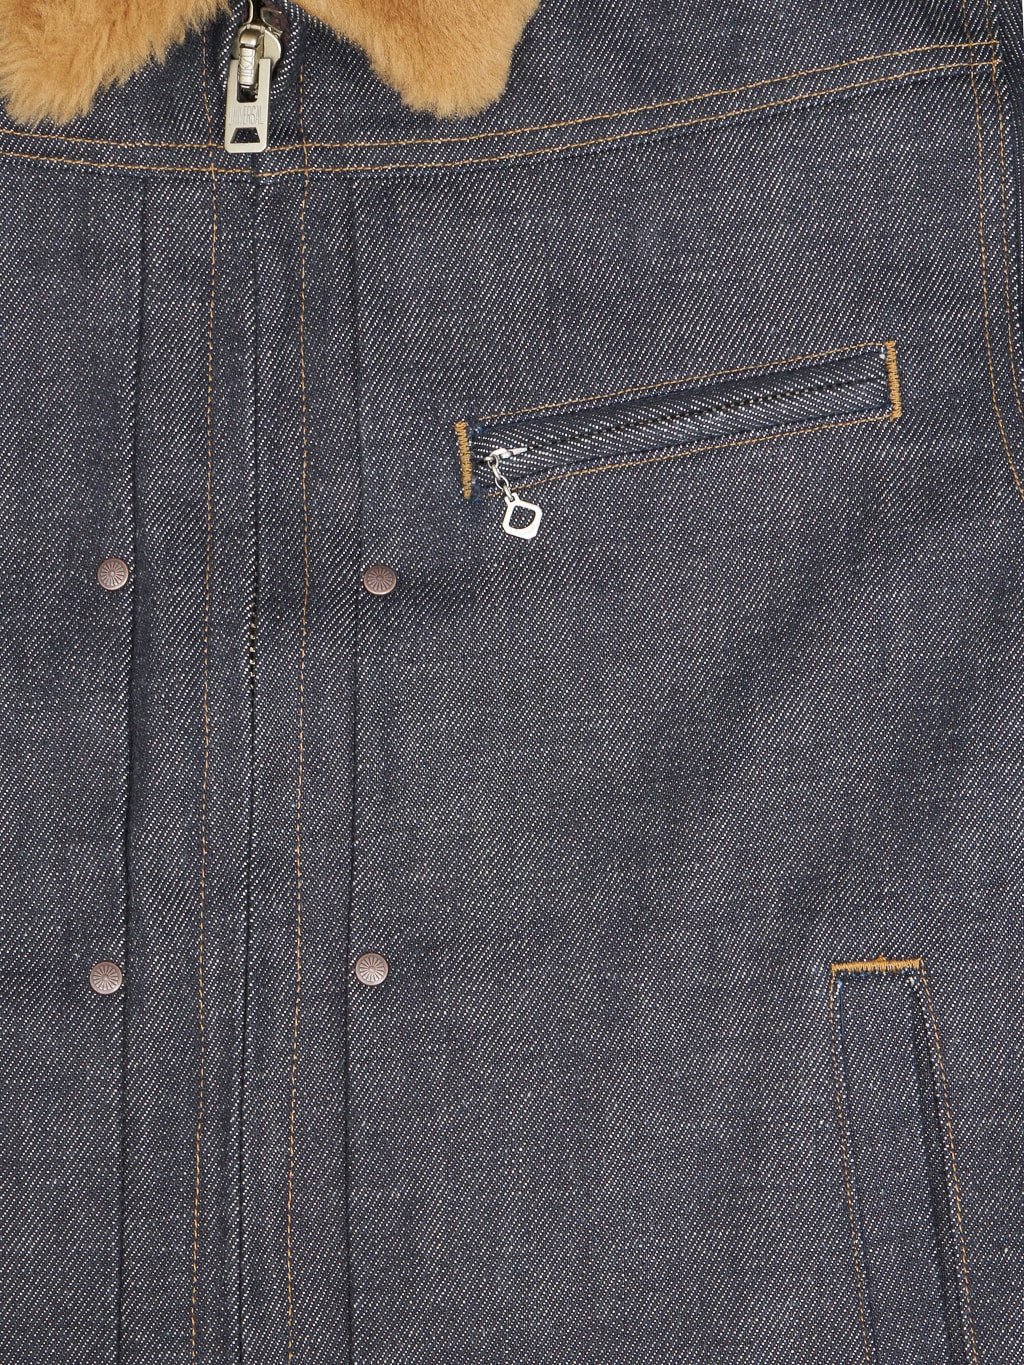 Freenote cloth denim shearling jacket chest pocket zipper 